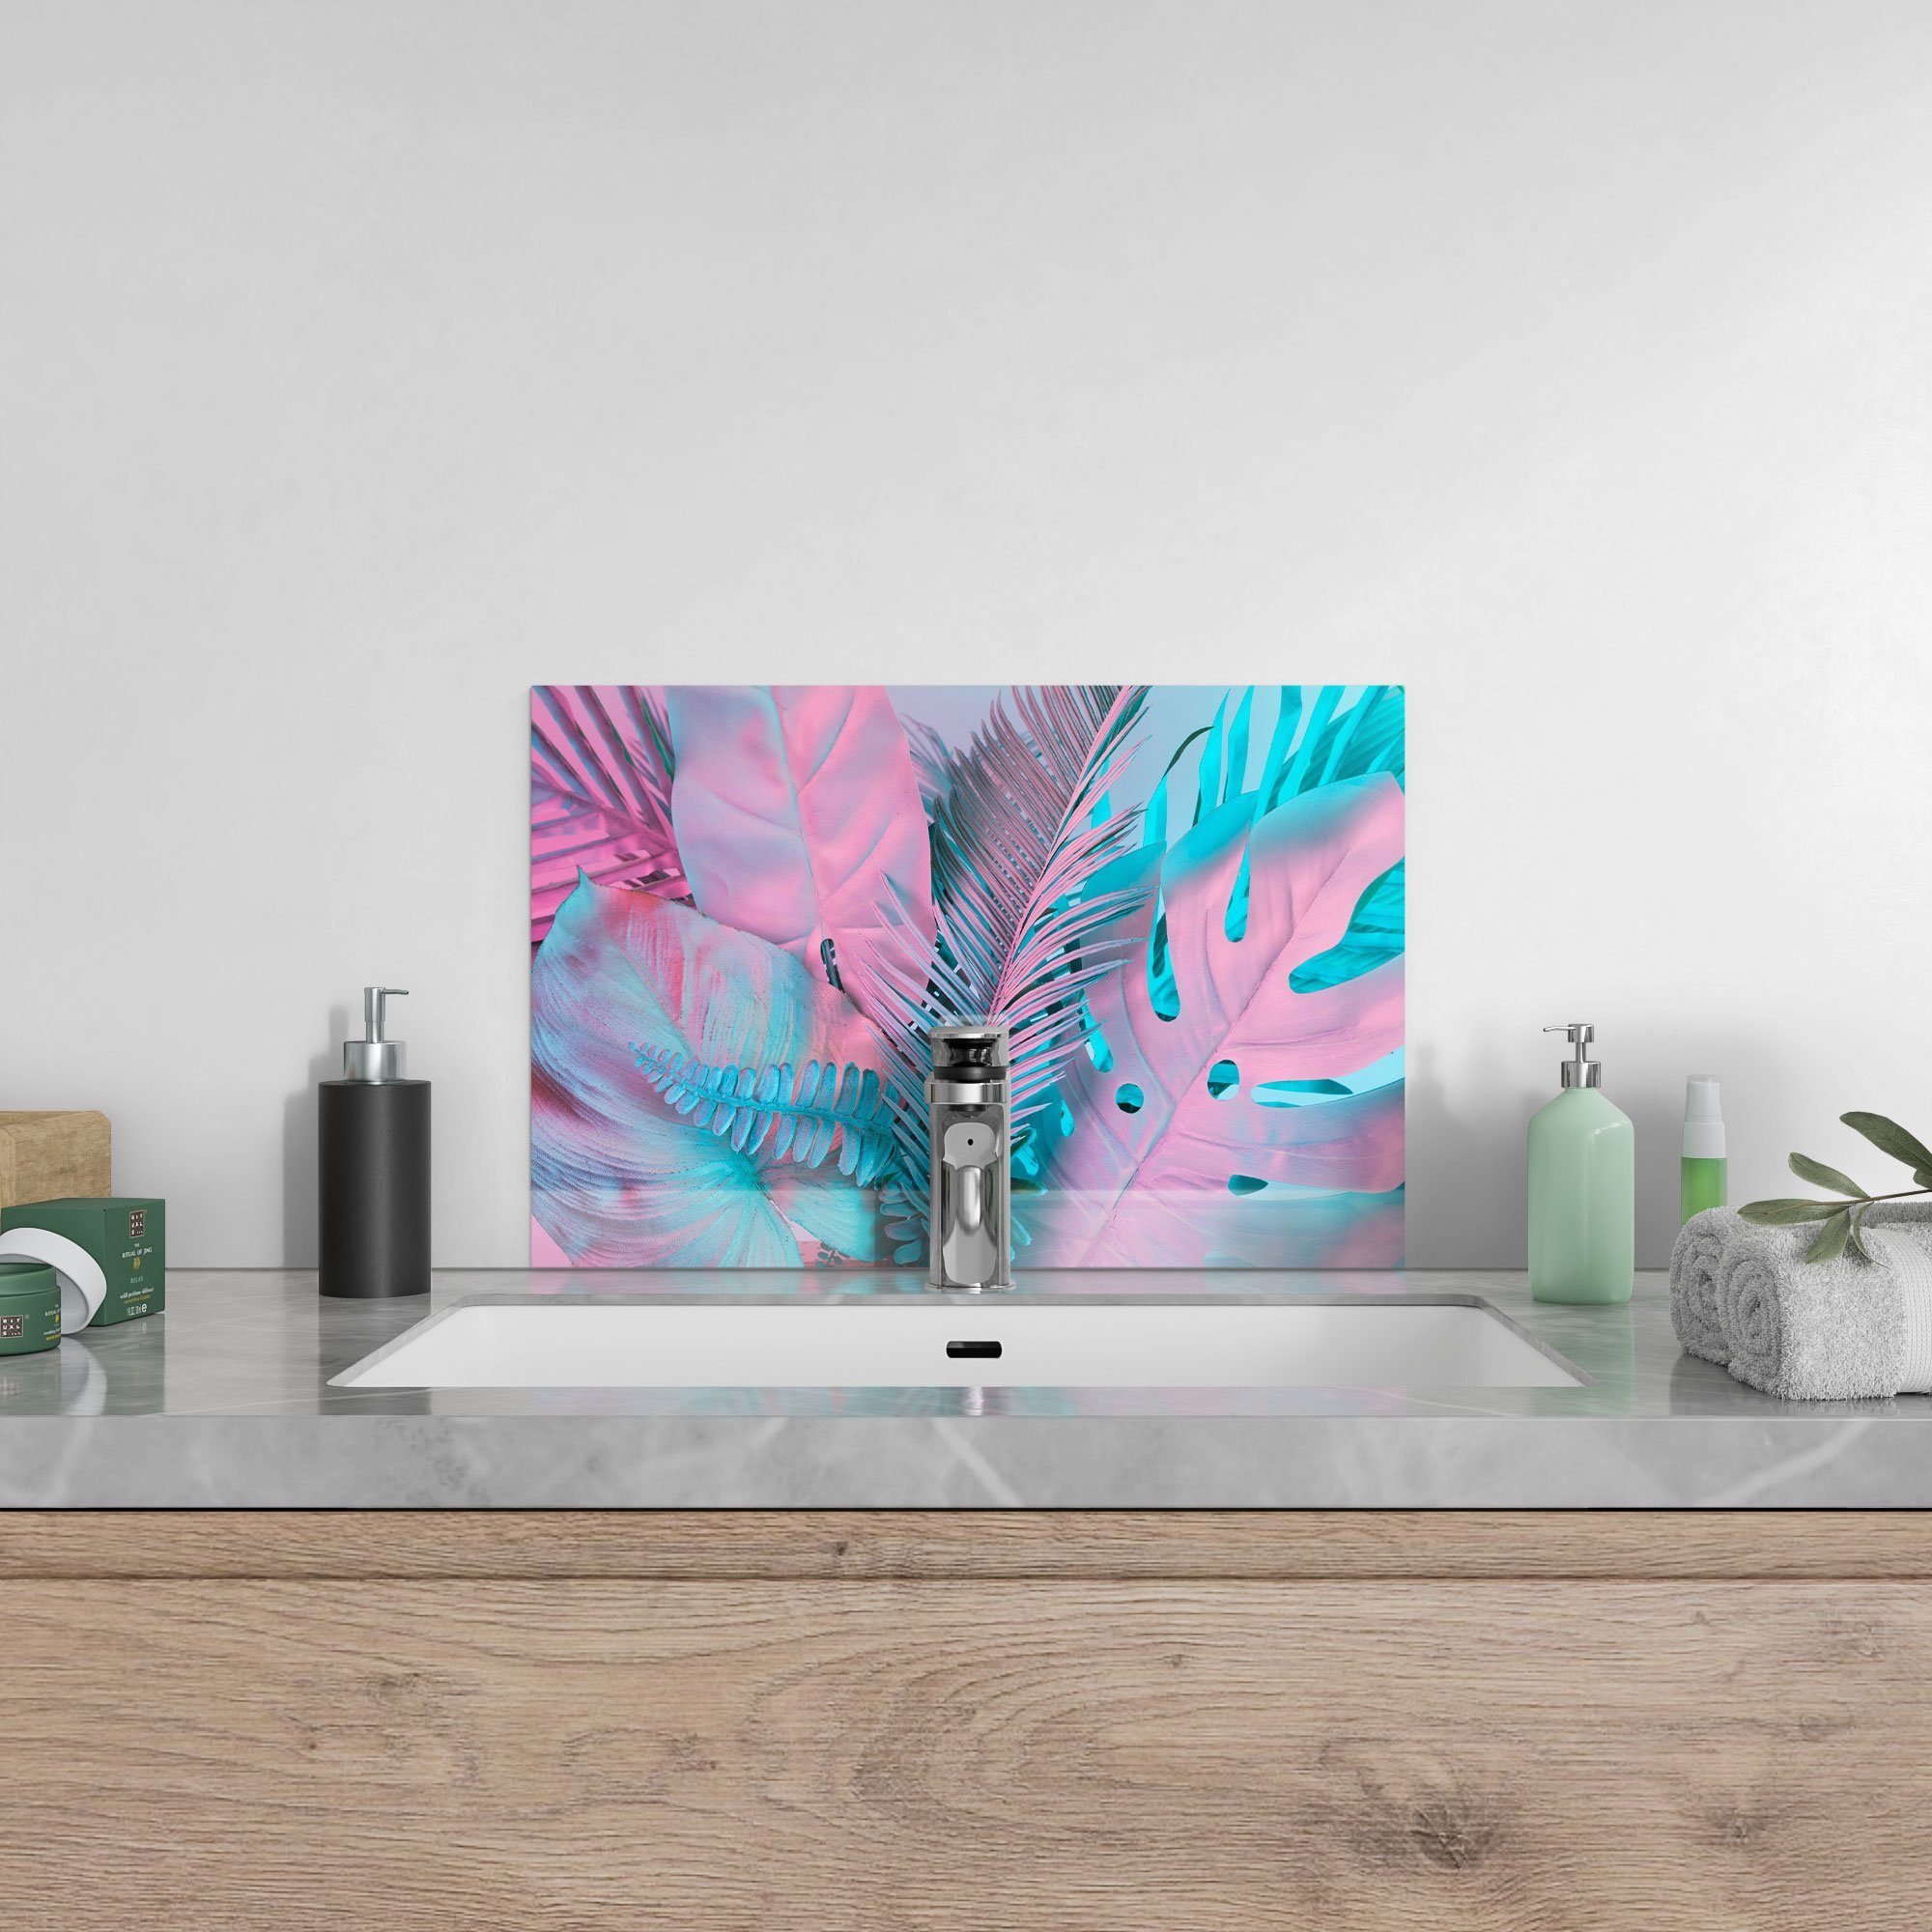 Glas Herdblende DEQORI Farbeffekt', 'Tropenblätter: Spritzschutz Küchenrückwand Badrückwand